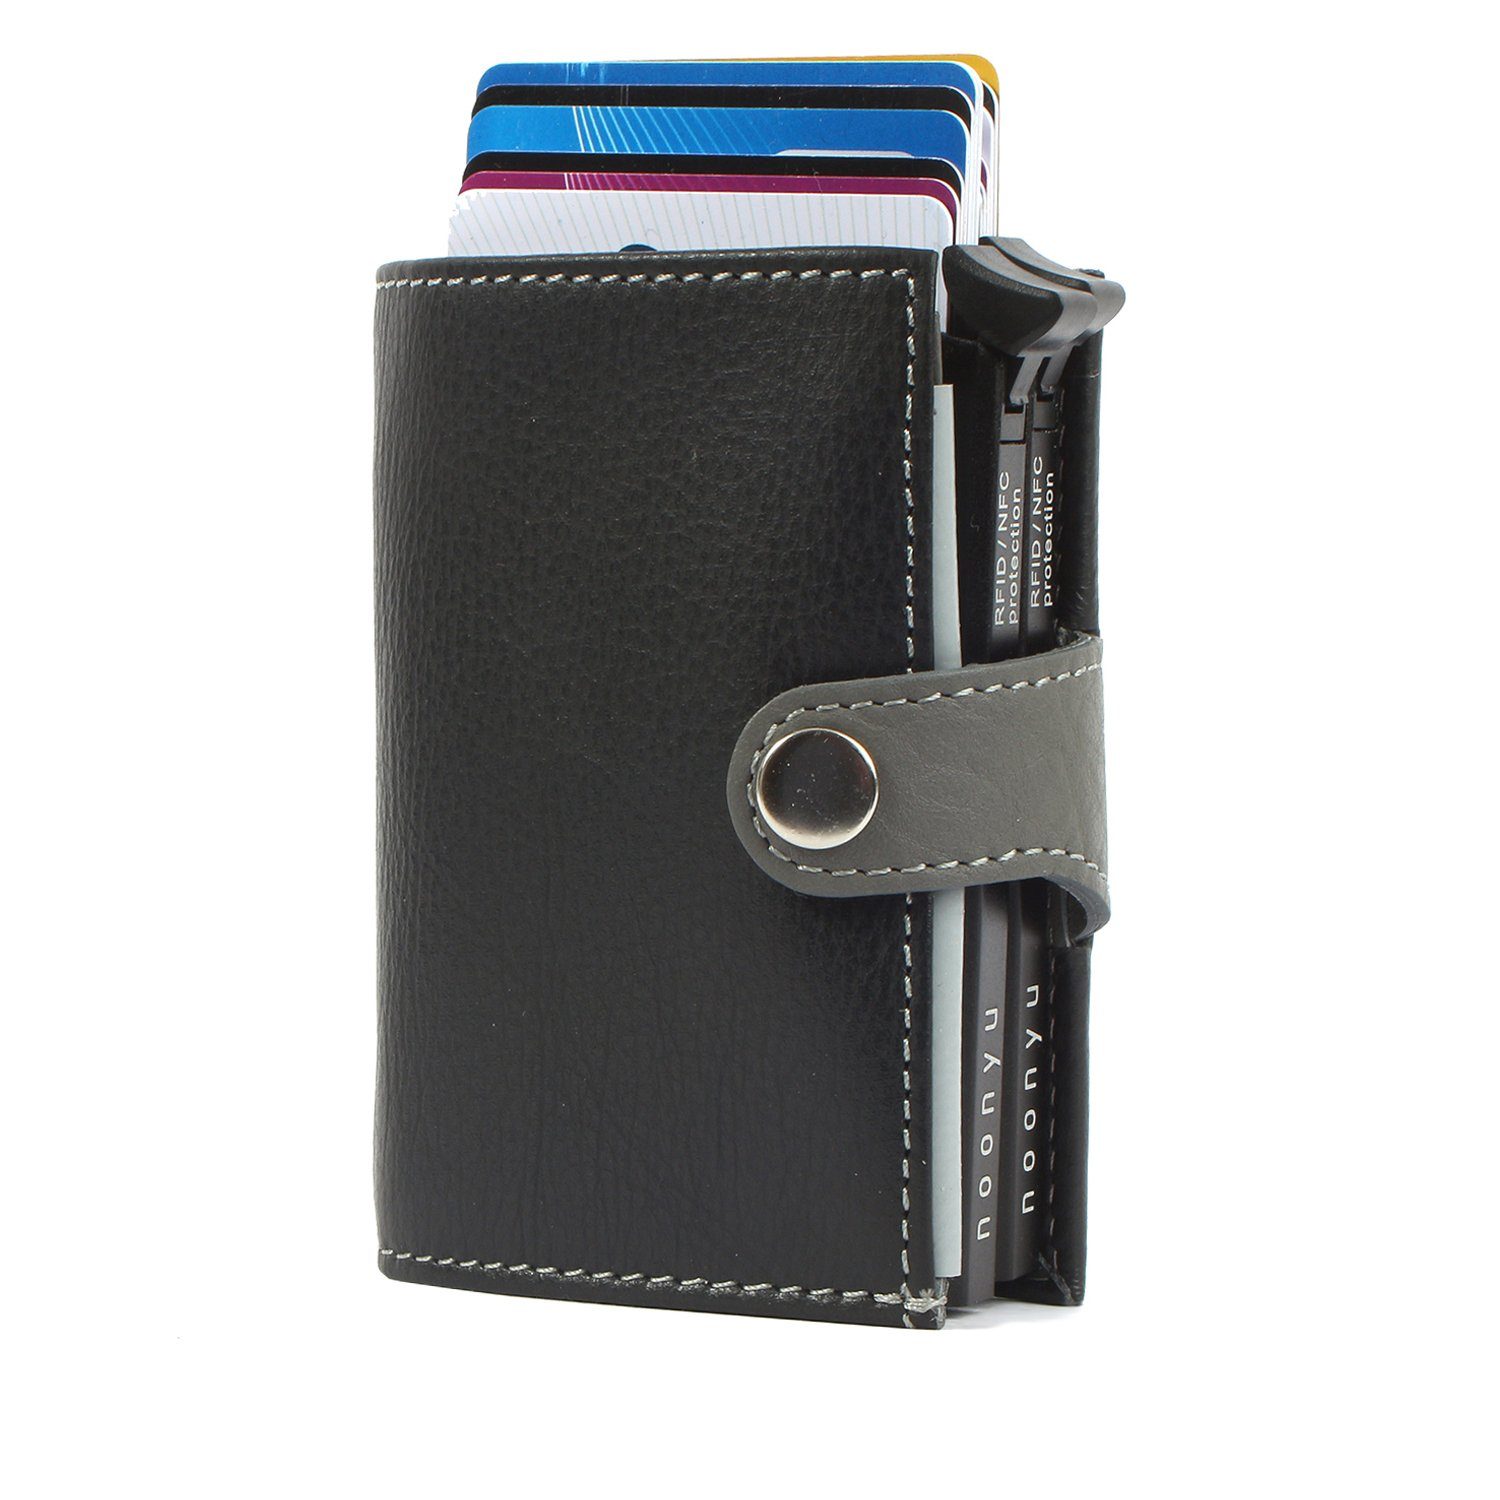 Margelisch Mini Geldbörse noonyu double RFID aus black Leder leather, Kreditkartenbörse Upcycling